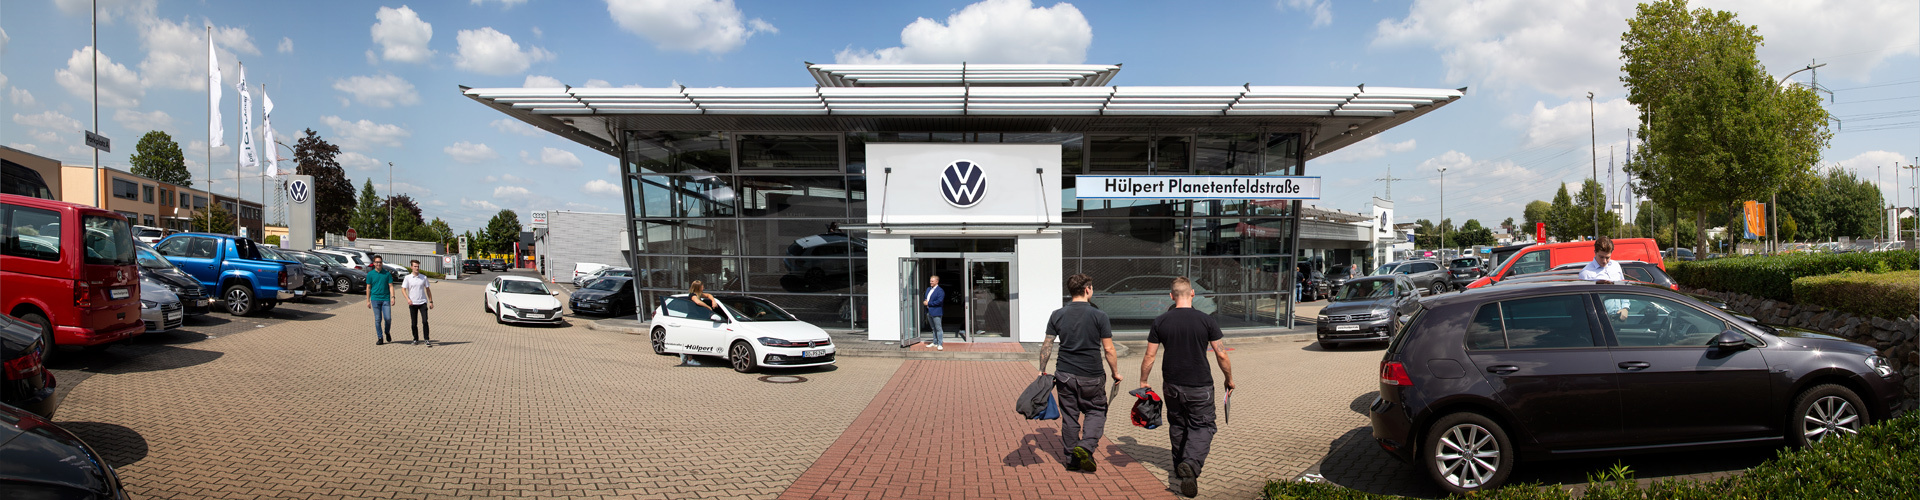 Hülpert Planetenfeldstraße - VW Autohaus in der Aussenansicht